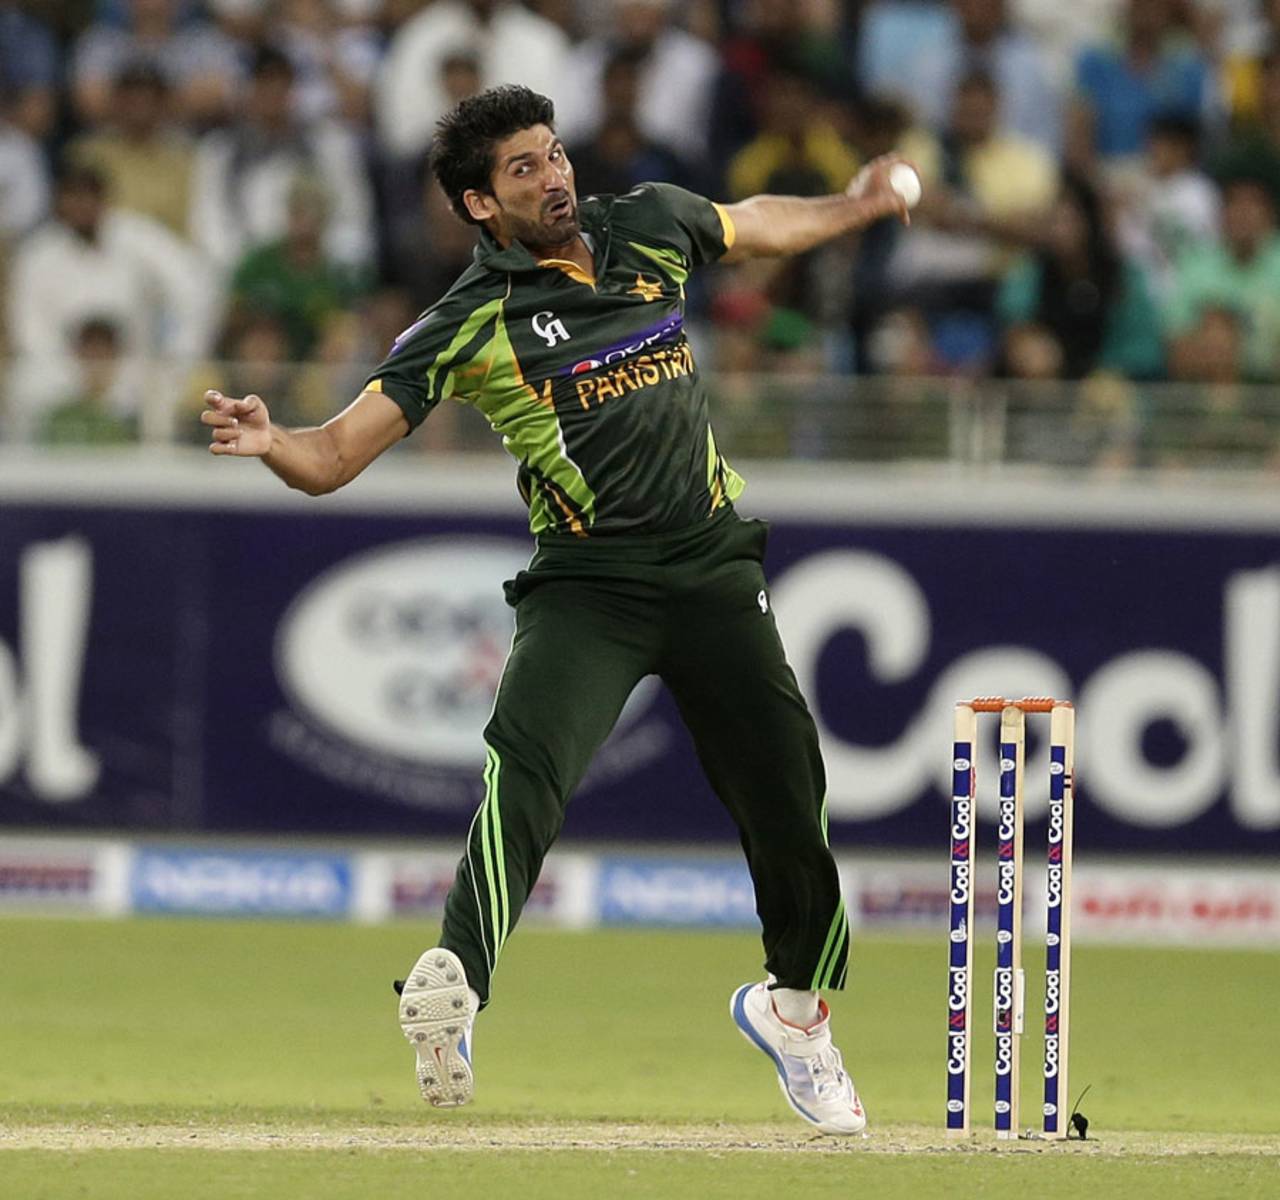 Sohail Tanvir in his delivery stride, Pakistan v South Africa, 2nd T20I, Dubai, November 15, 2013